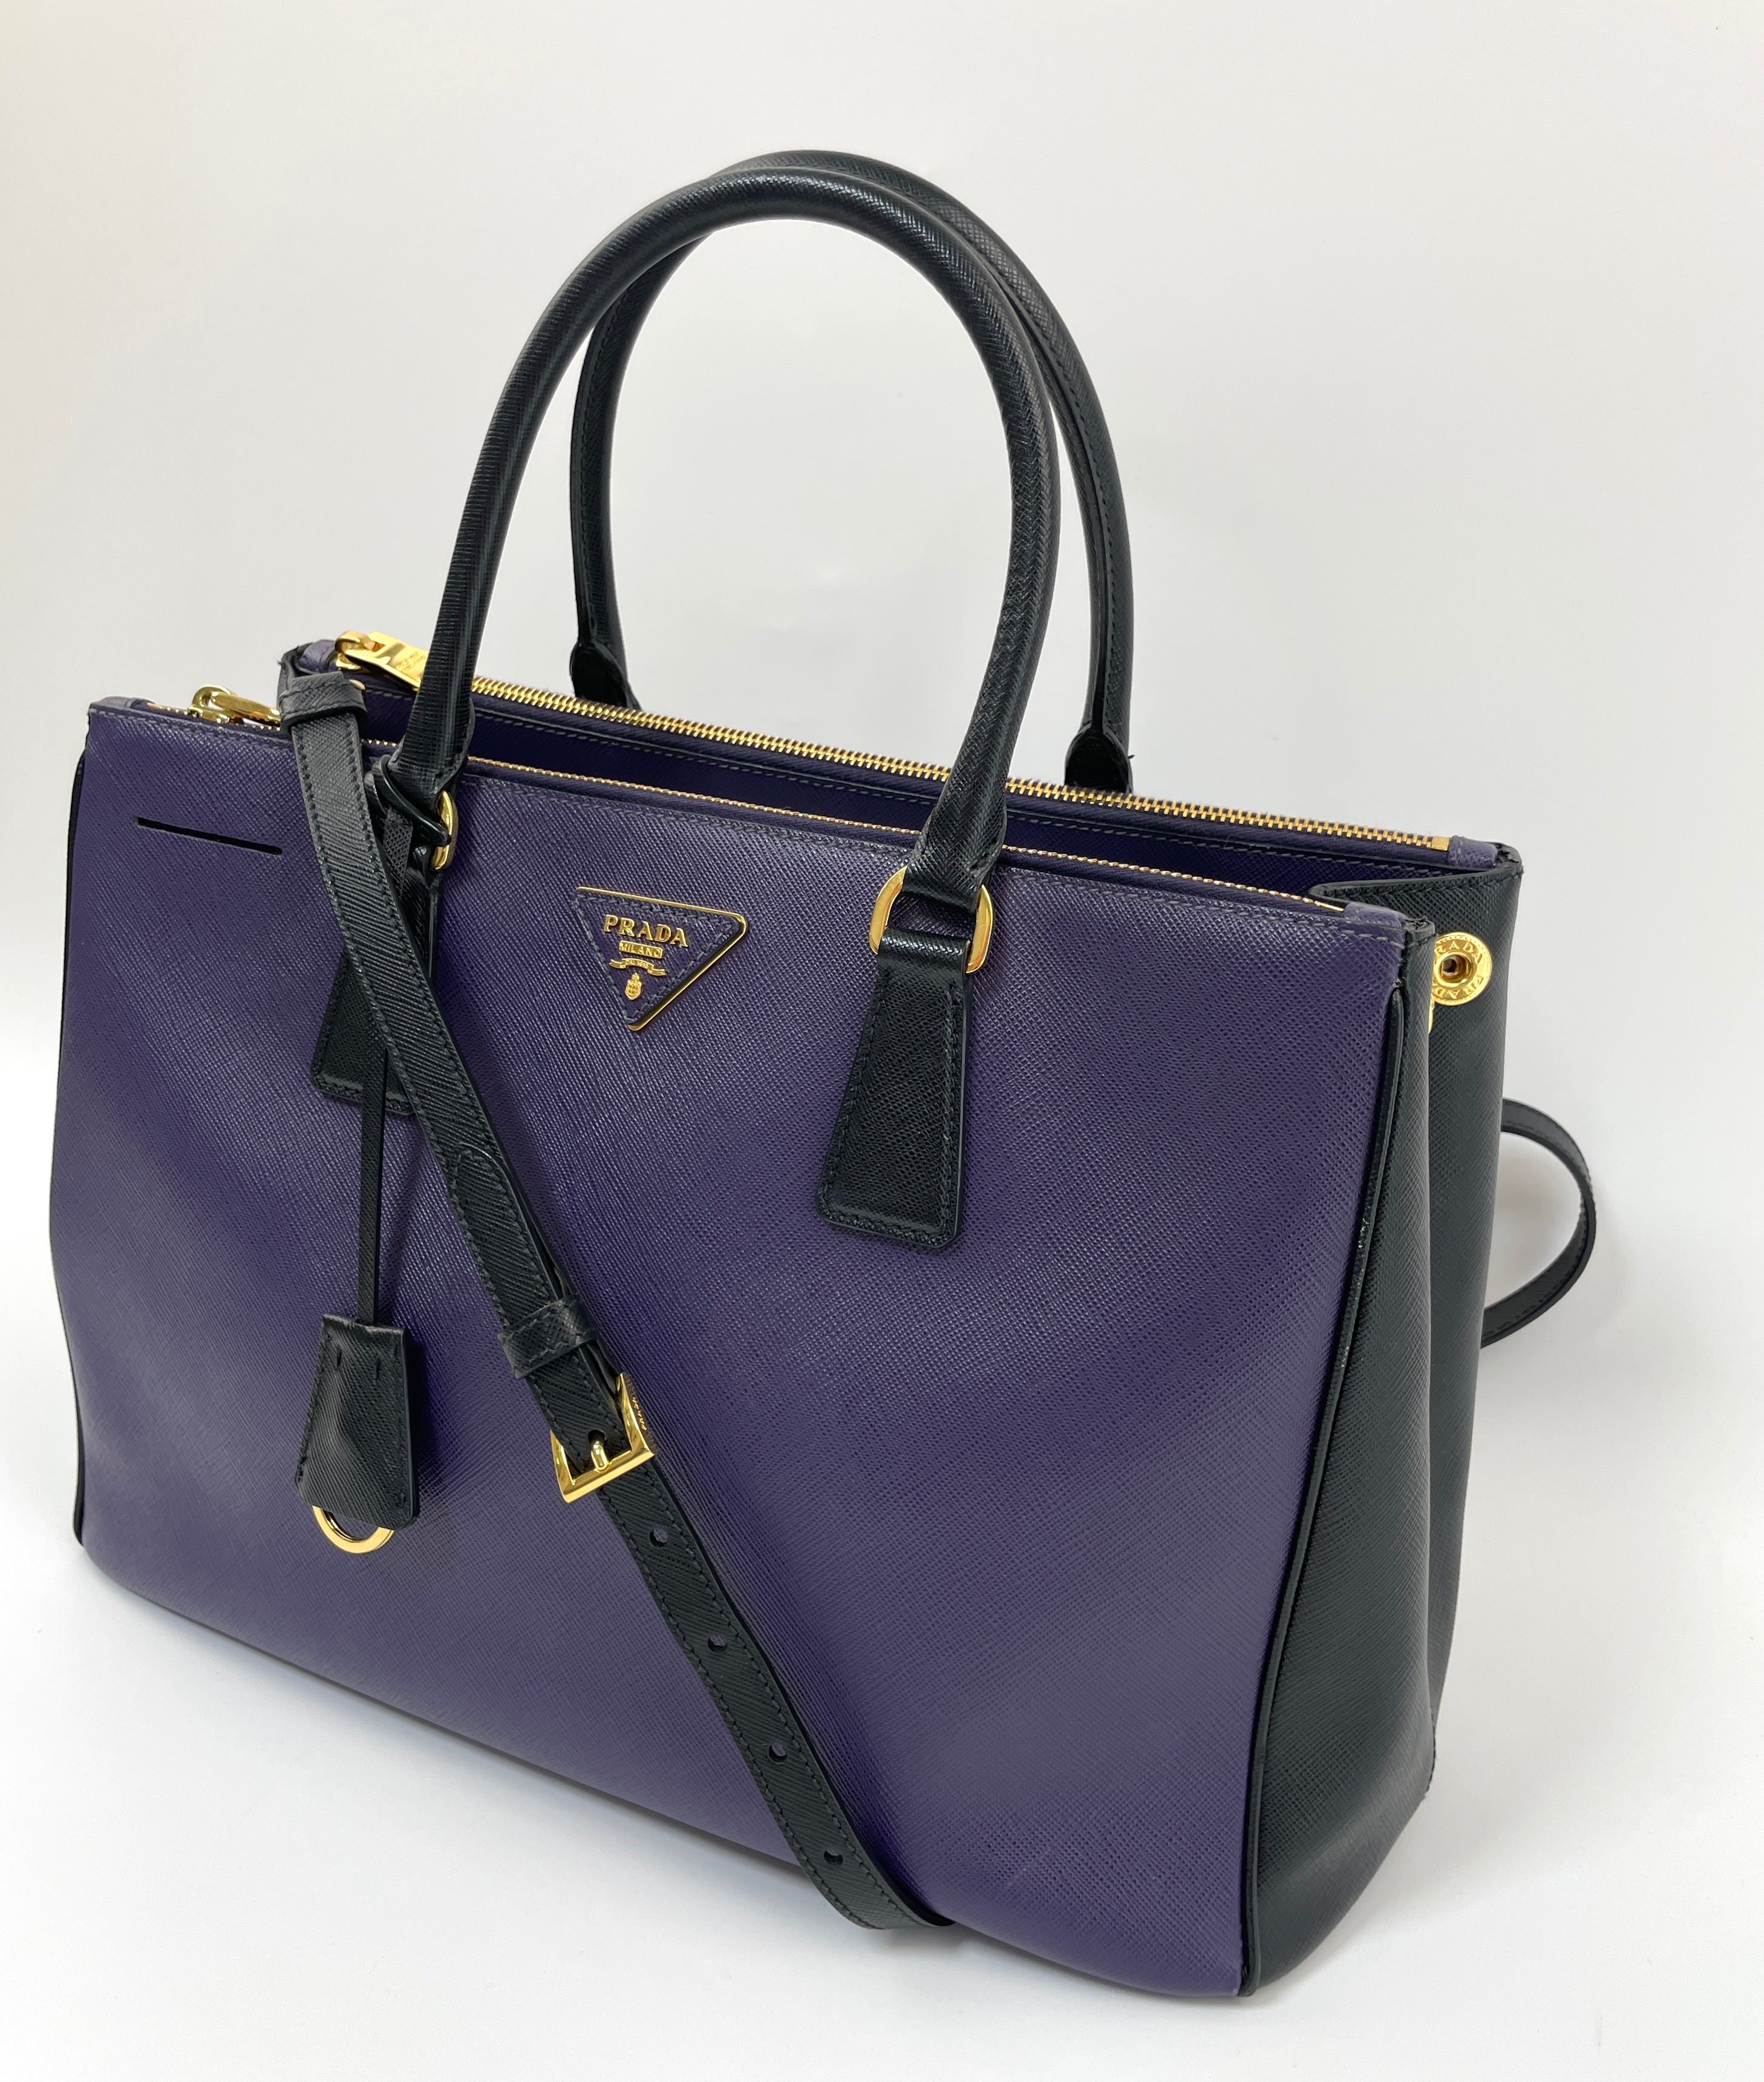 Prada Saffiano Lux Tote Bag Handbag Black